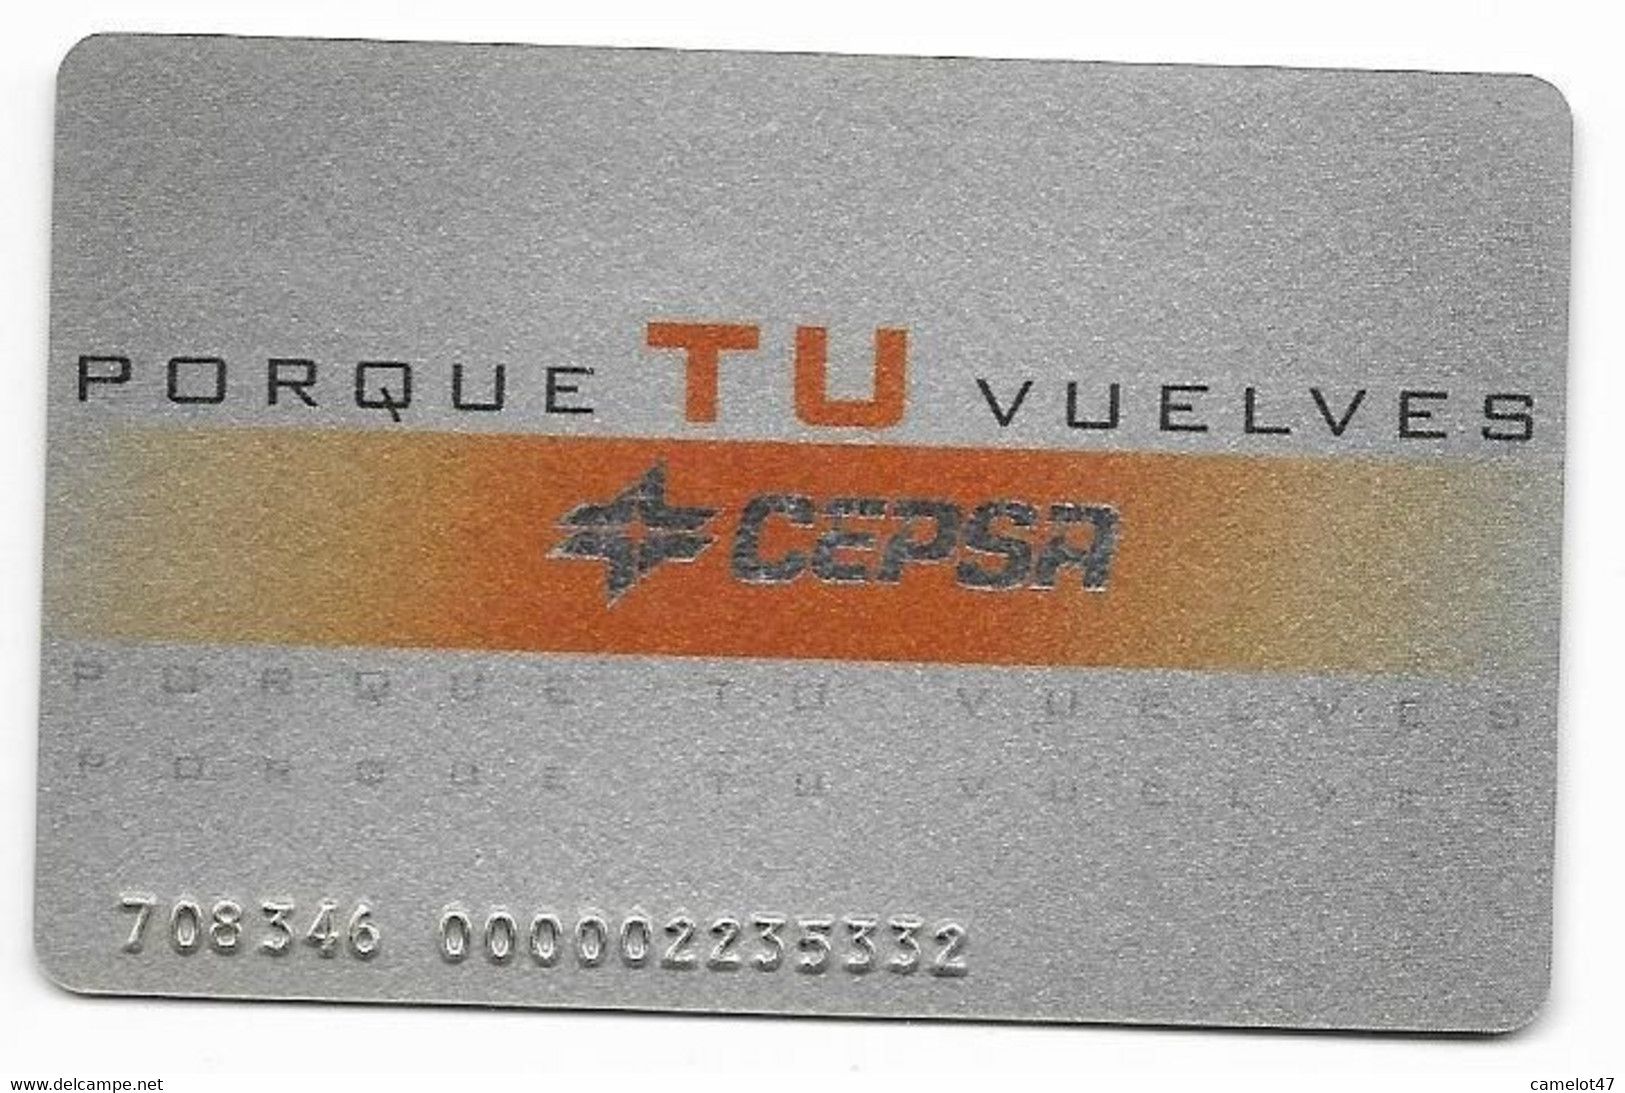 Cepsa Spain, Gas Stations Rewards Magnetic Card, # Cepsa-1  NOT A PHONE CARD - Oil